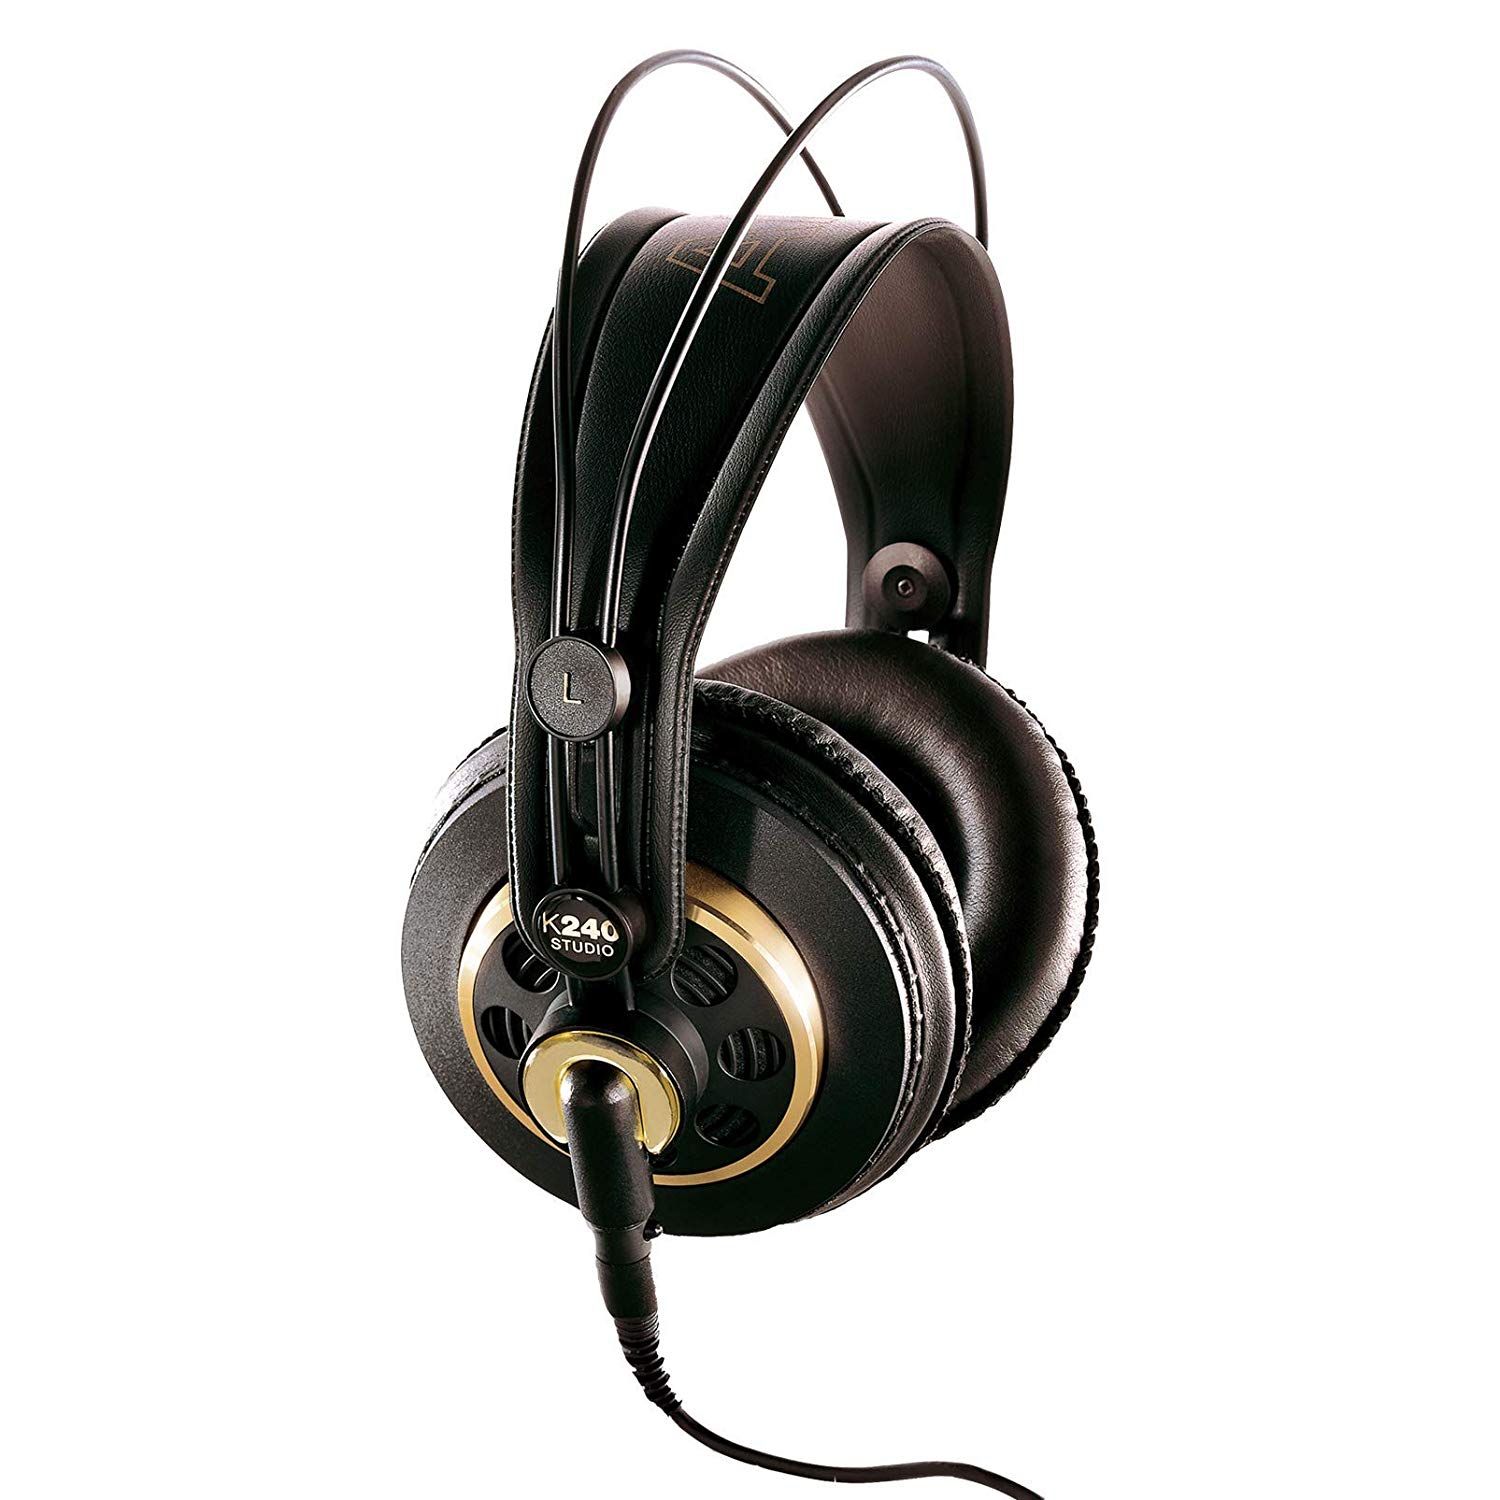 AKG Pro Audio K-240 Studio Professional Semi-Open Stereo Headphones Black-Gold